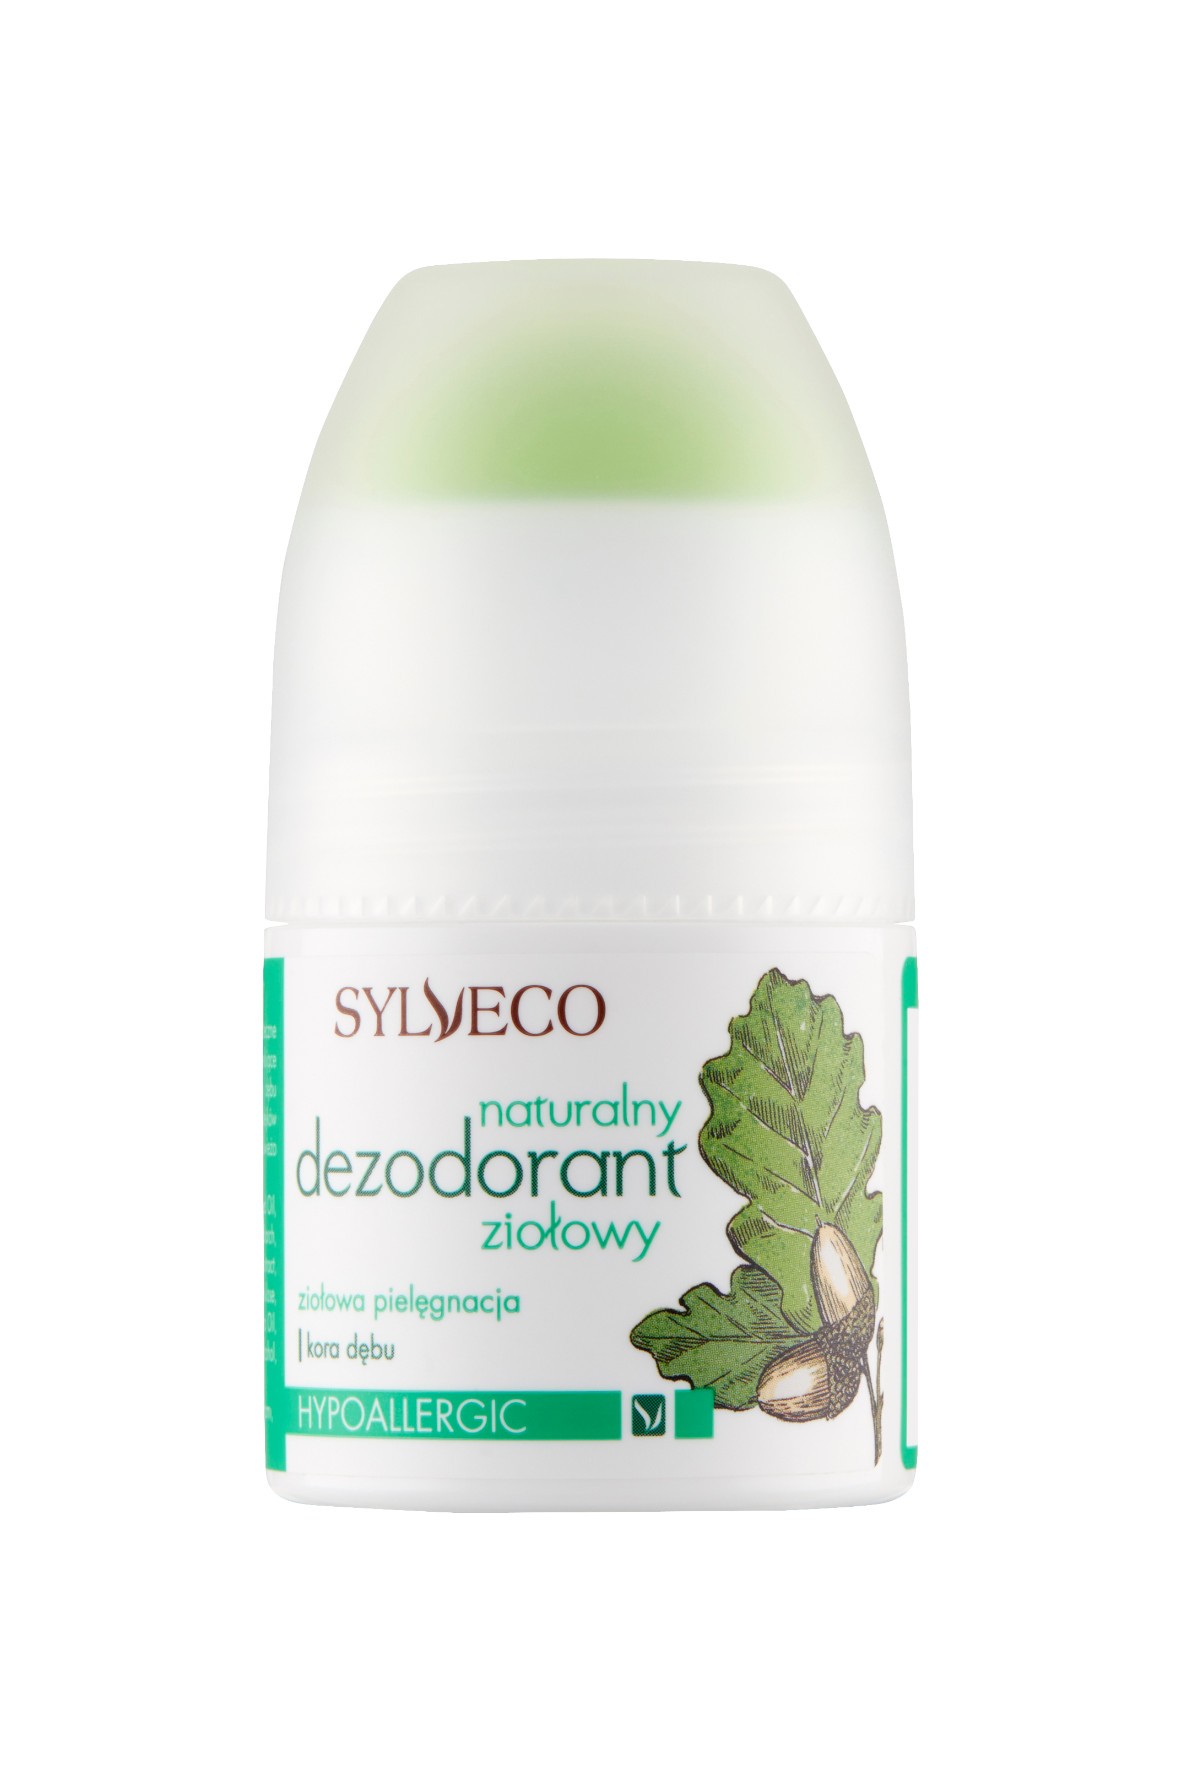  Naturalny dezodorant ziołowy Sylveco 50 ml